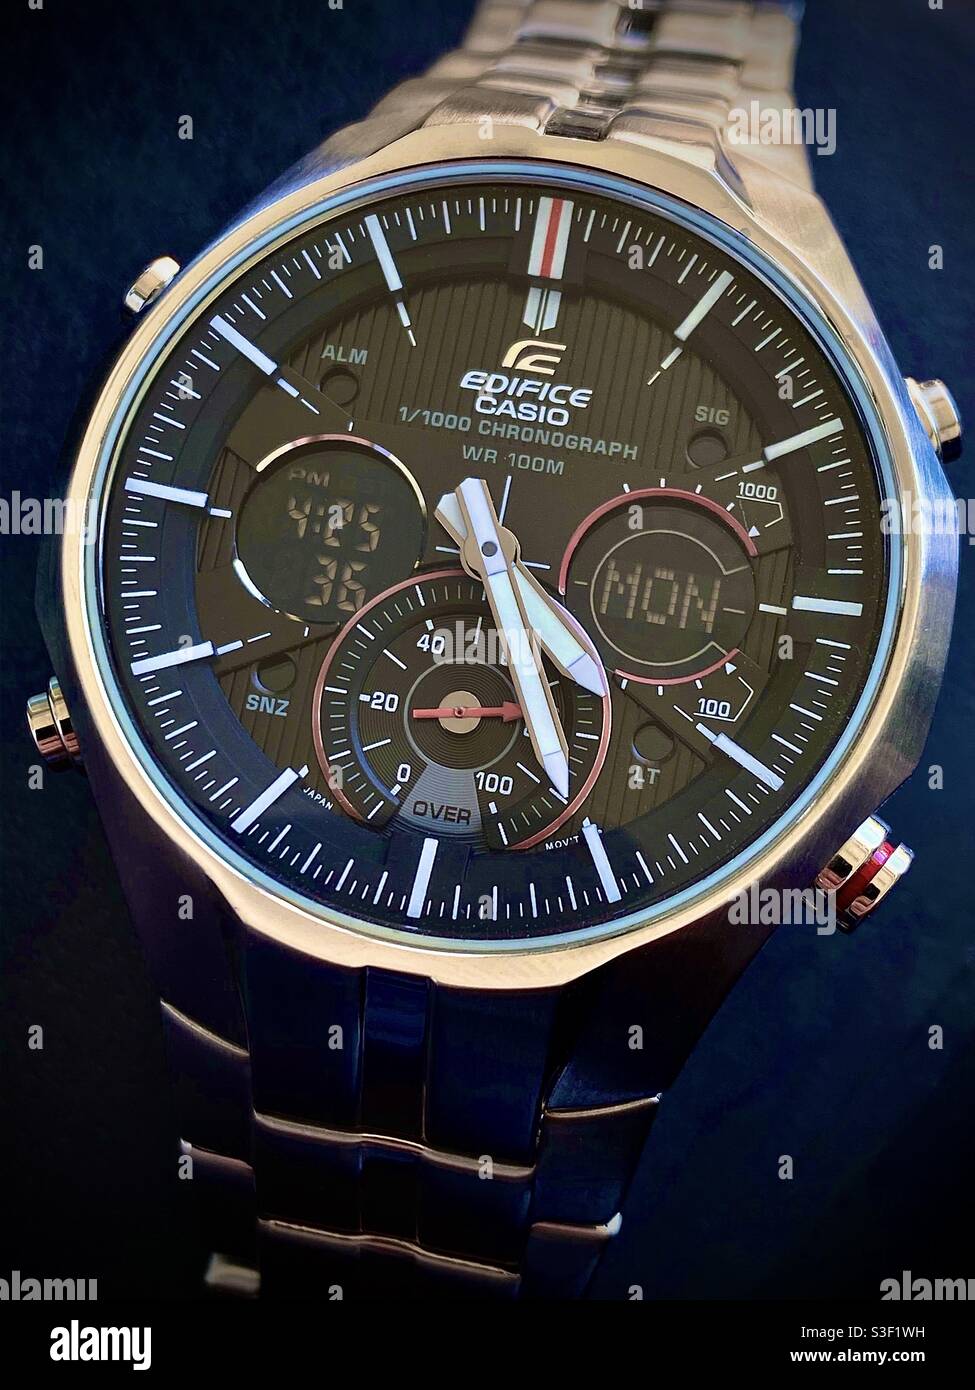 Casio Edifice EFA-135 chronograph quartz wrist watch with brushed and  polished stainless steel bracelet on blue background Stock Photo - Alamy